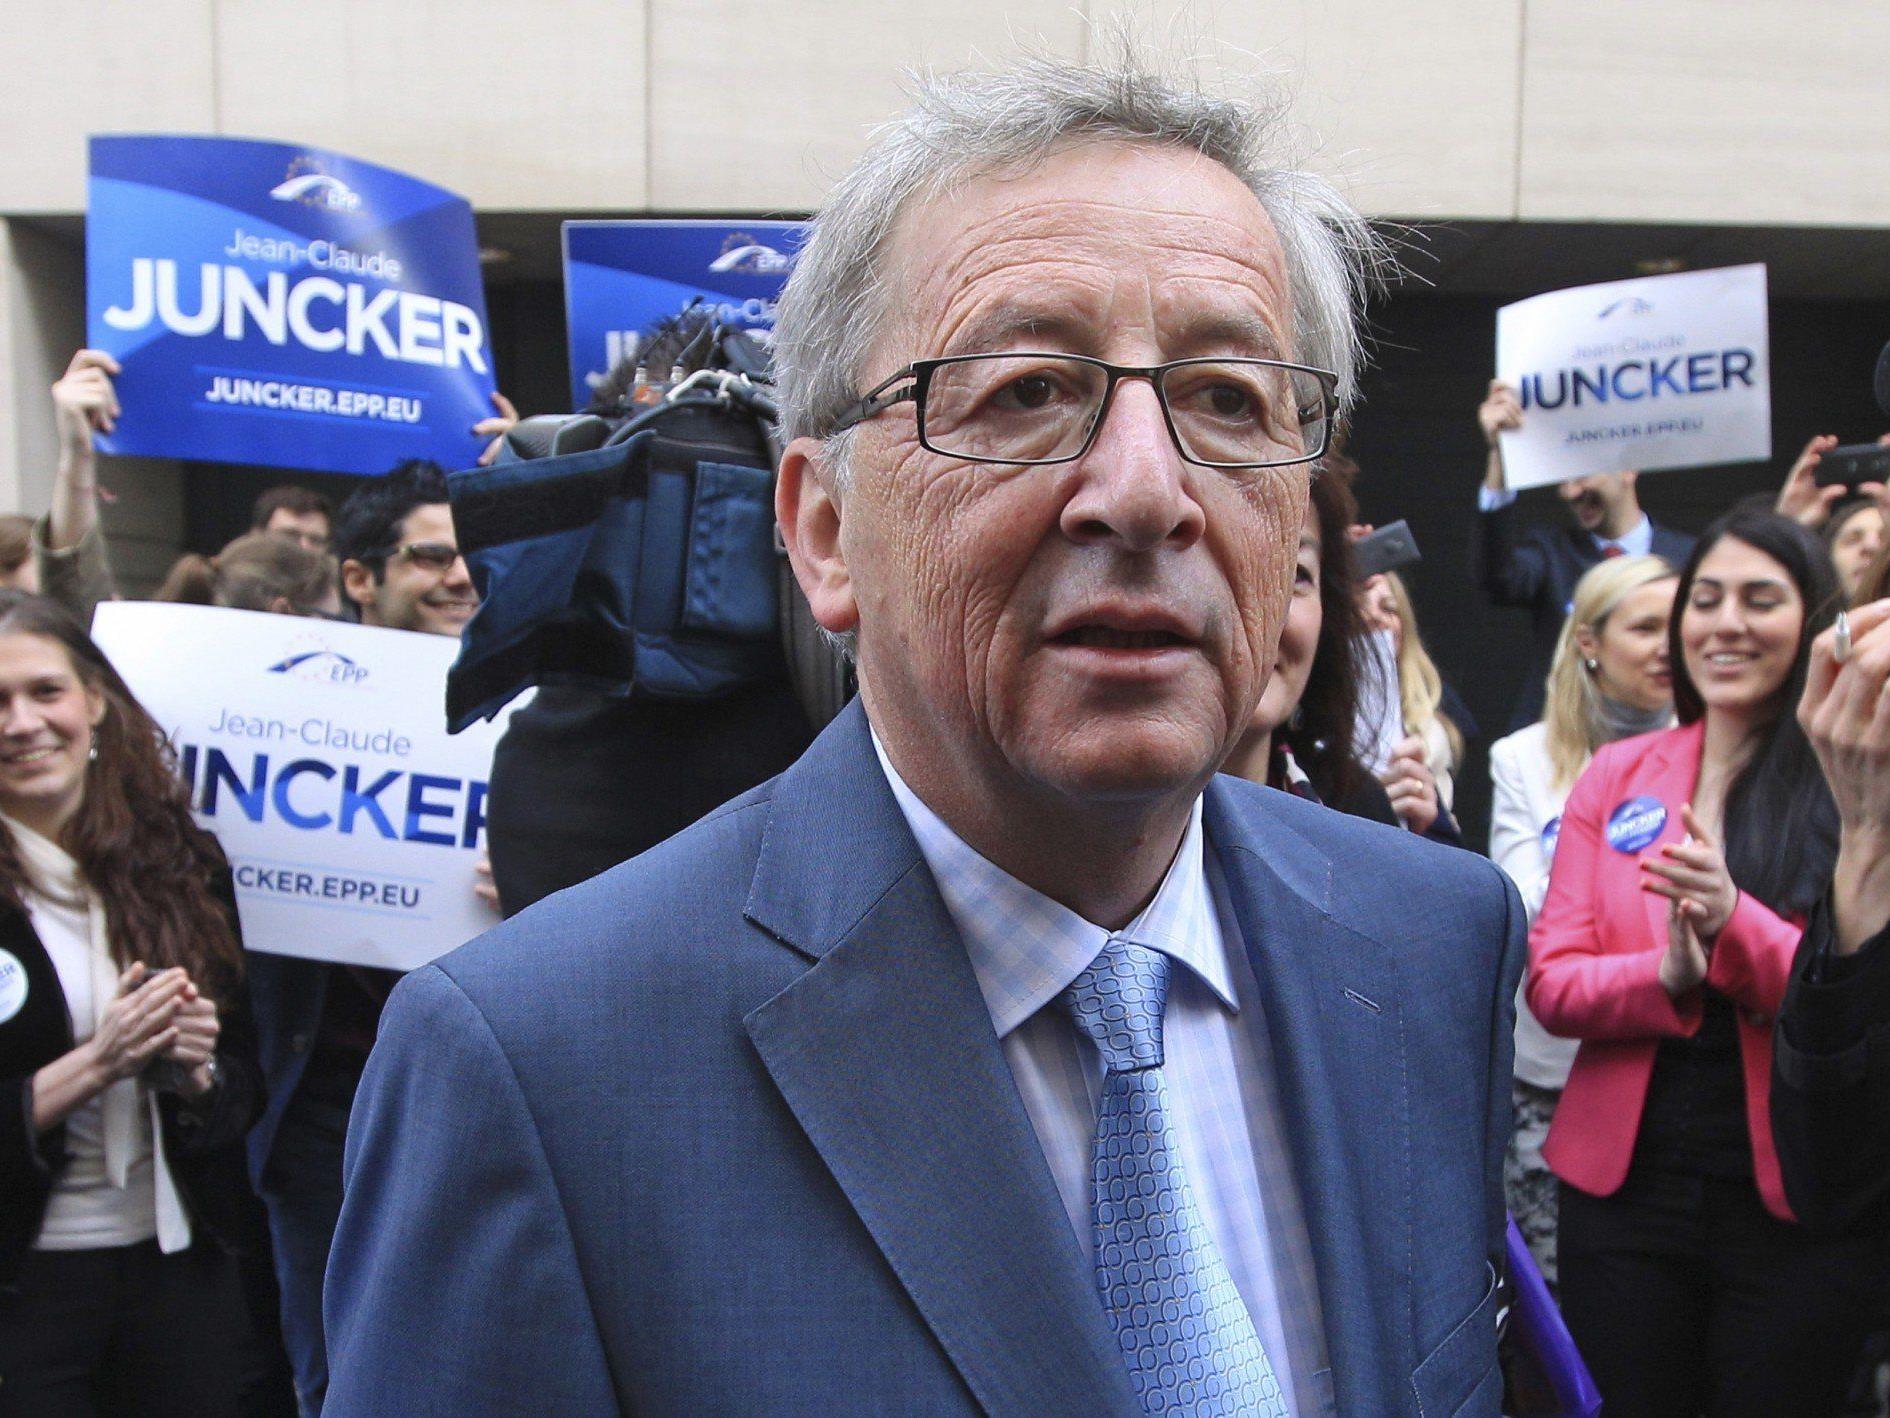 Juncker als EU-Kommissionspräsident nominiert - Machtkampf zwischen EU-Rat und EU-Parlament